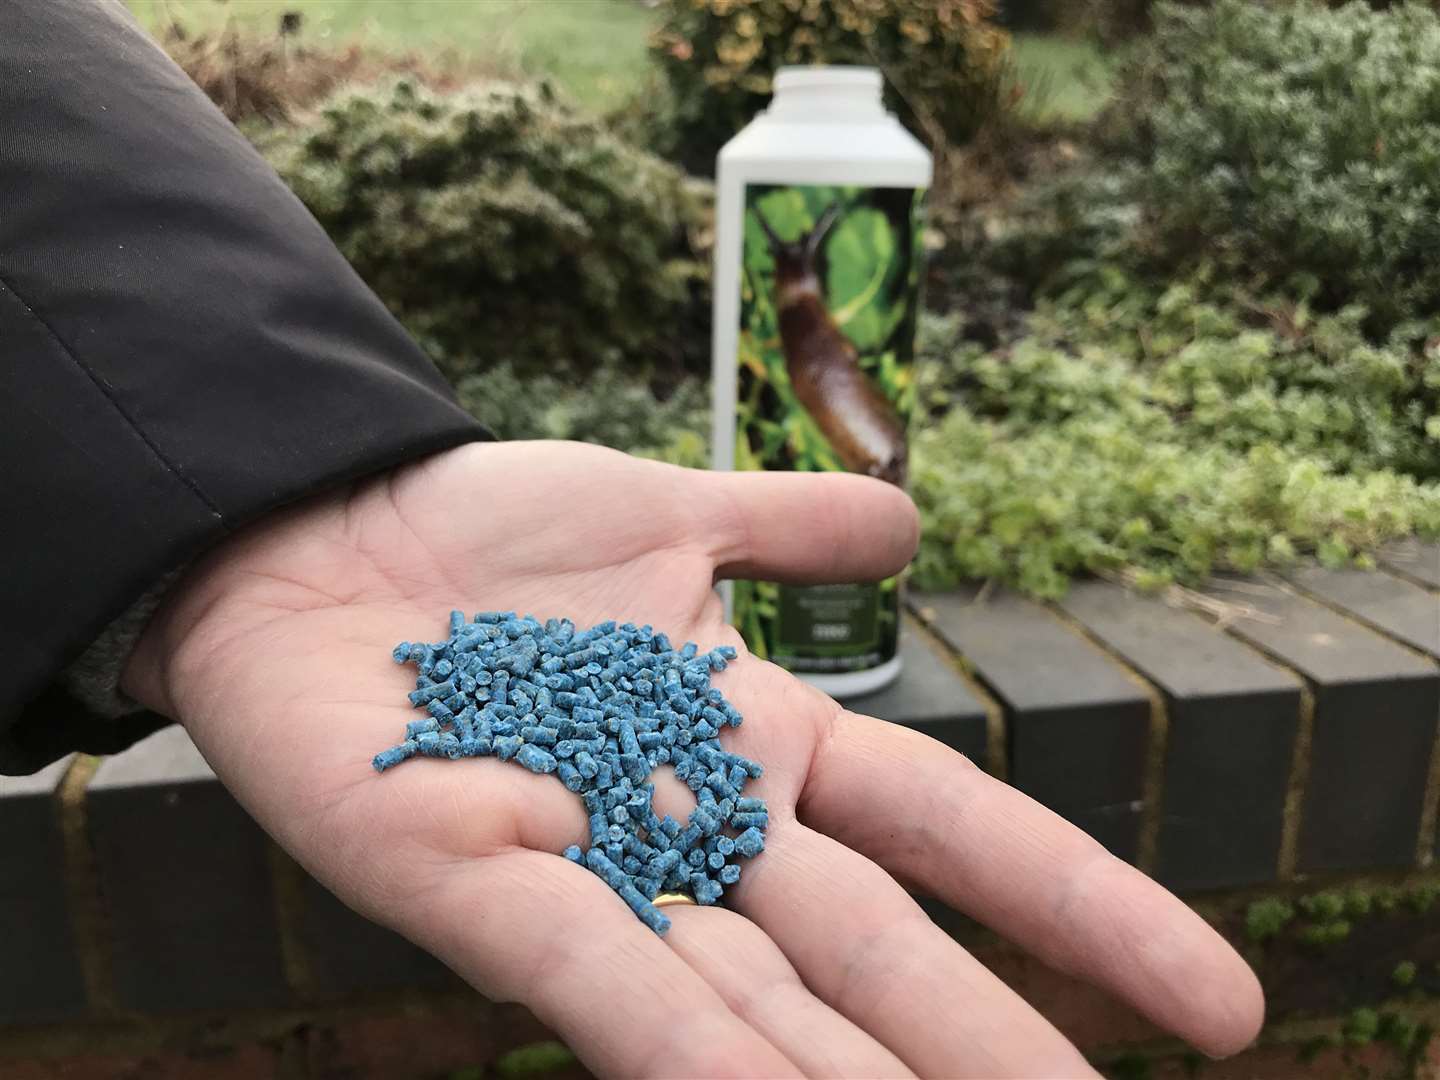 Avoid the use of slug pellets and pesticides. Picture: Hannah Stephenson/PA